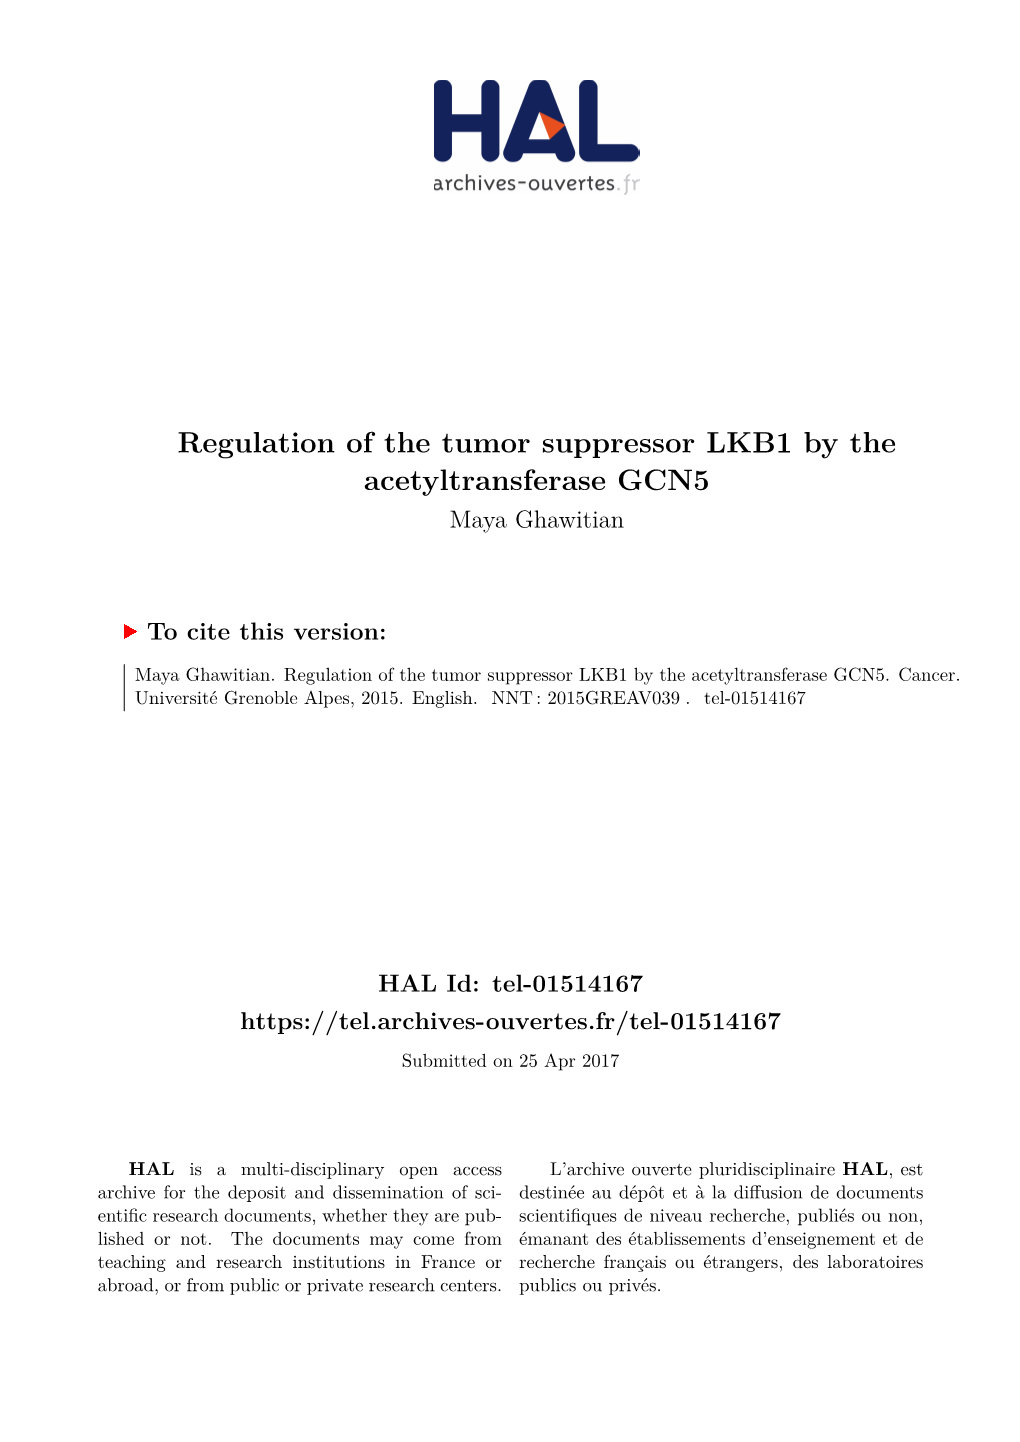 Regulation of the Tumor Suppressor LKB1 by the Acetyltransferase GCN5 Maya Ghawitian